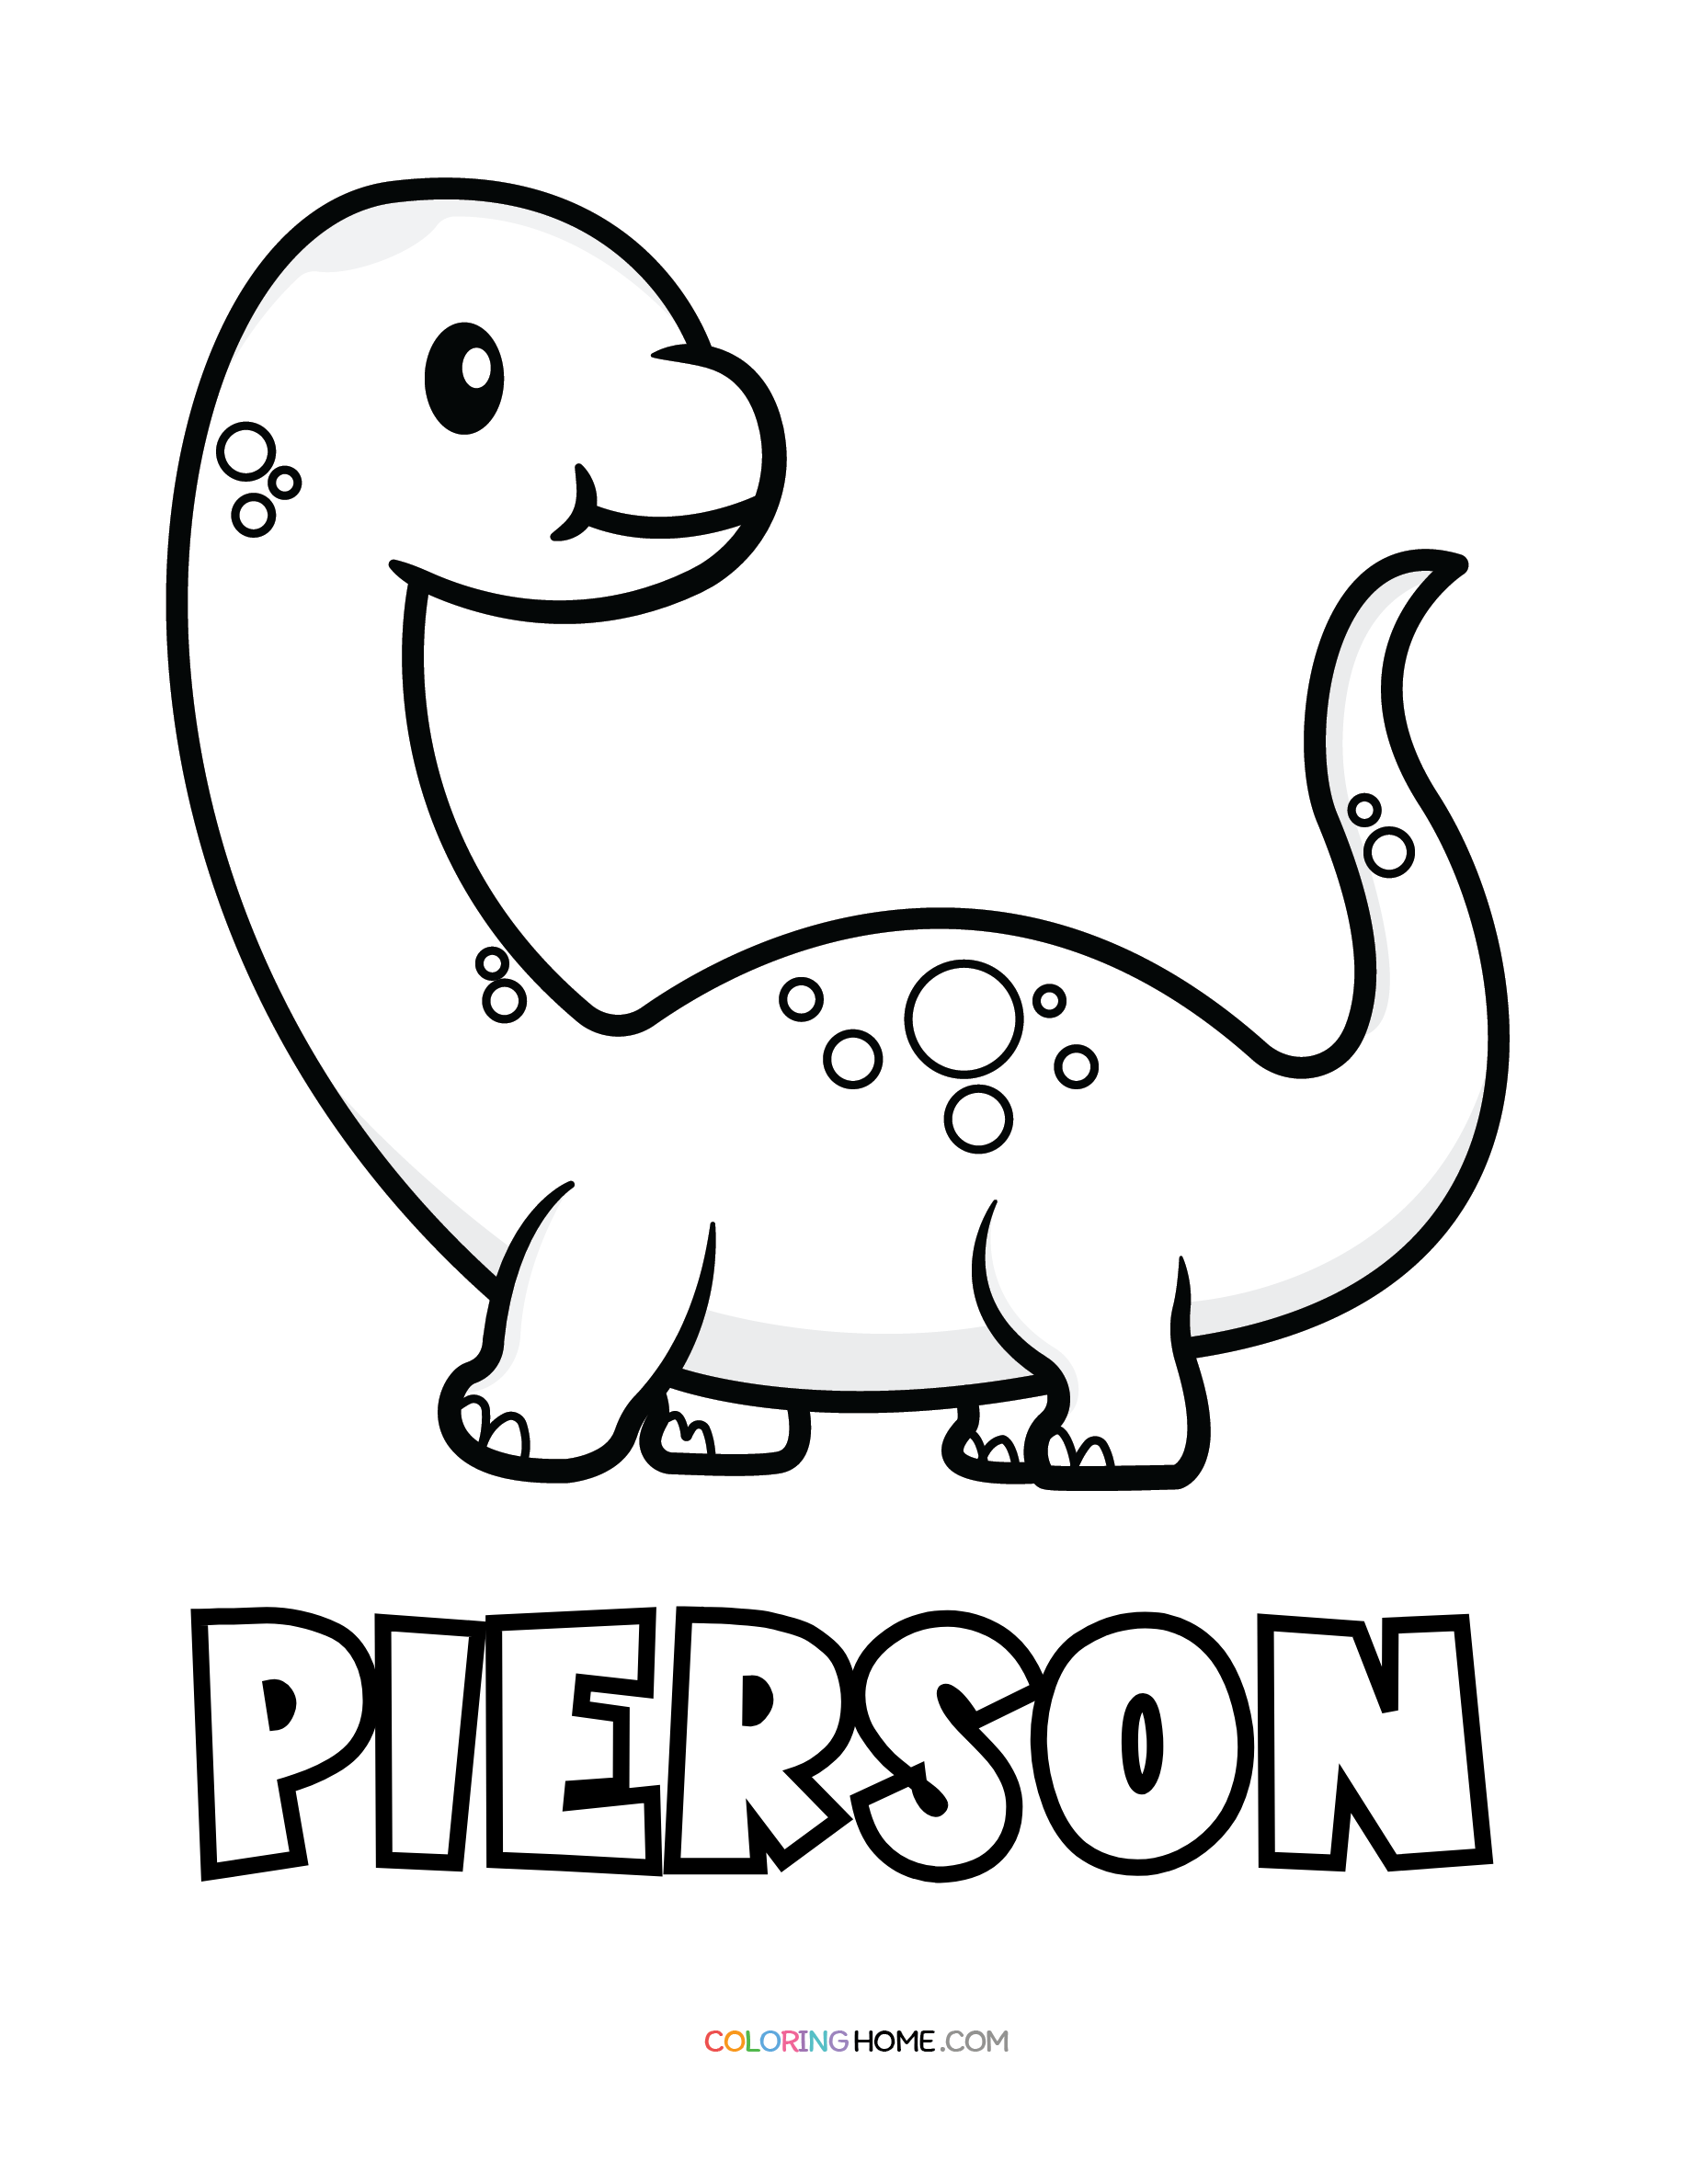 Pierson dinosaur coloring page